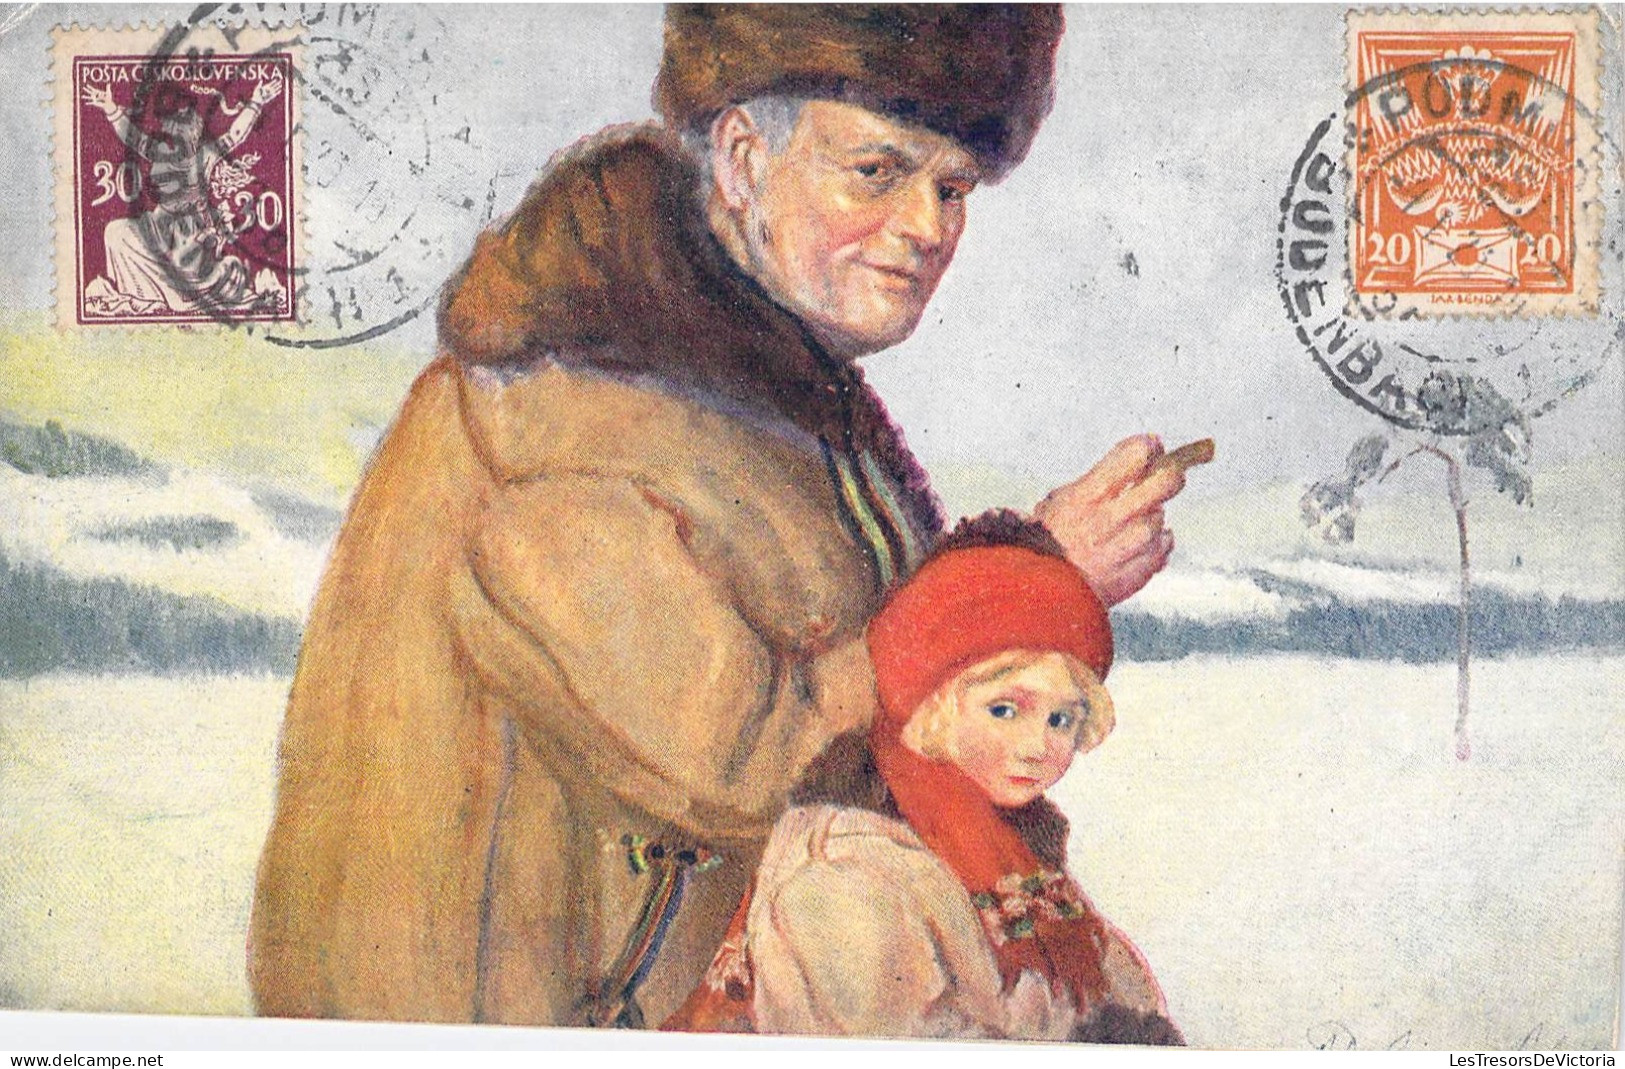 Tchéquie - Vanocni A Novorocni Pozdrav - Dobrovolsky - Grand Père Et Petite Fille - Colorisé - Carte Postale Ancienne - Czech Republic